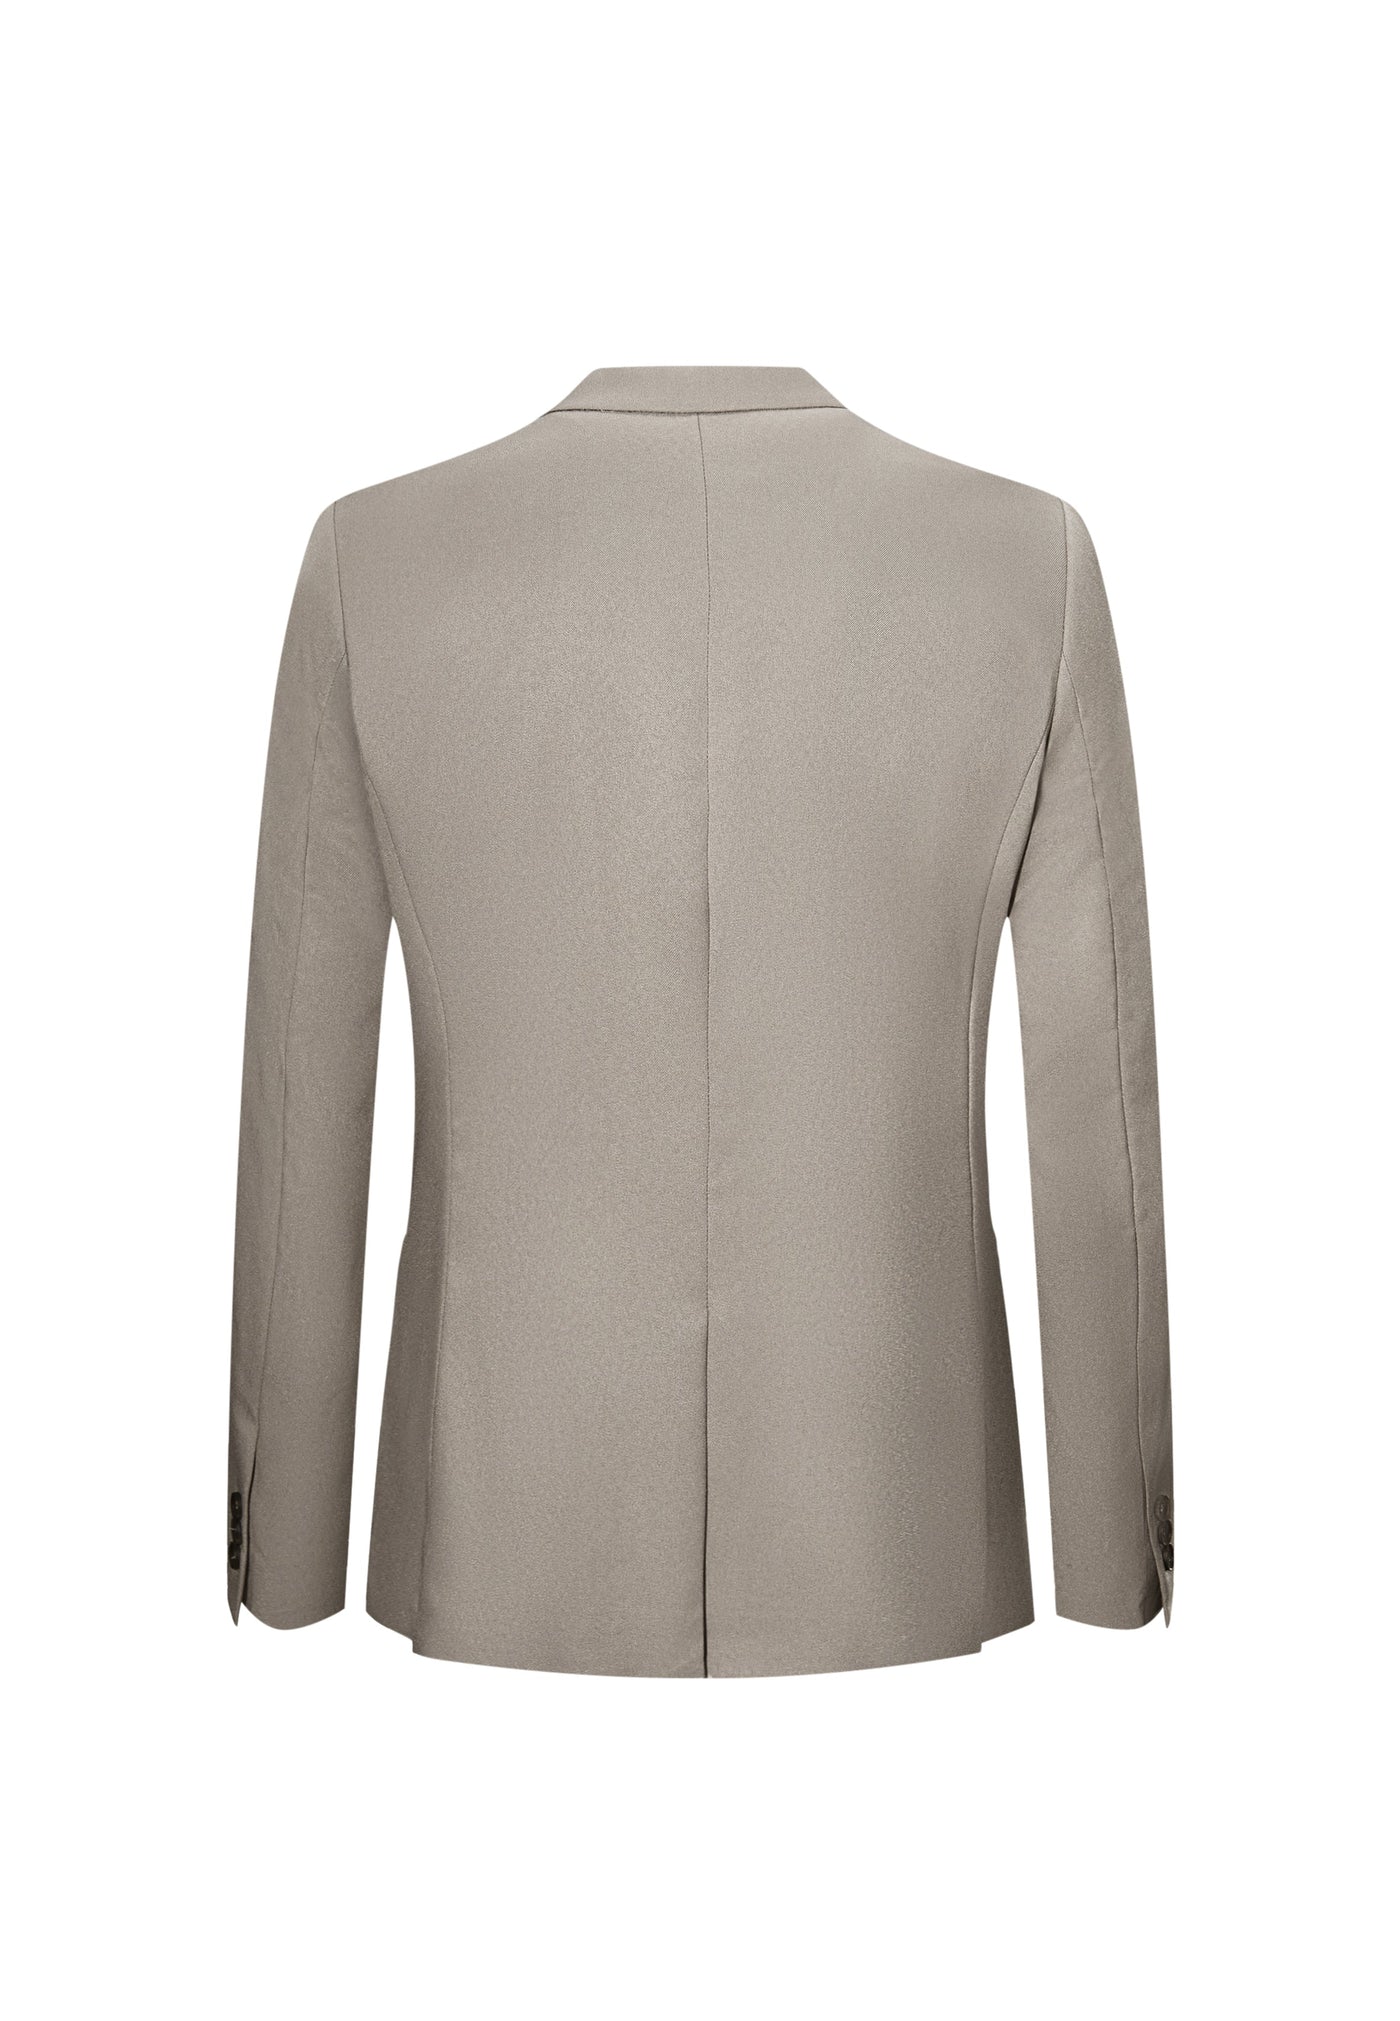 Men Clothing Teflon Finishing Stain Resistant Suit Blazer Smart Fit